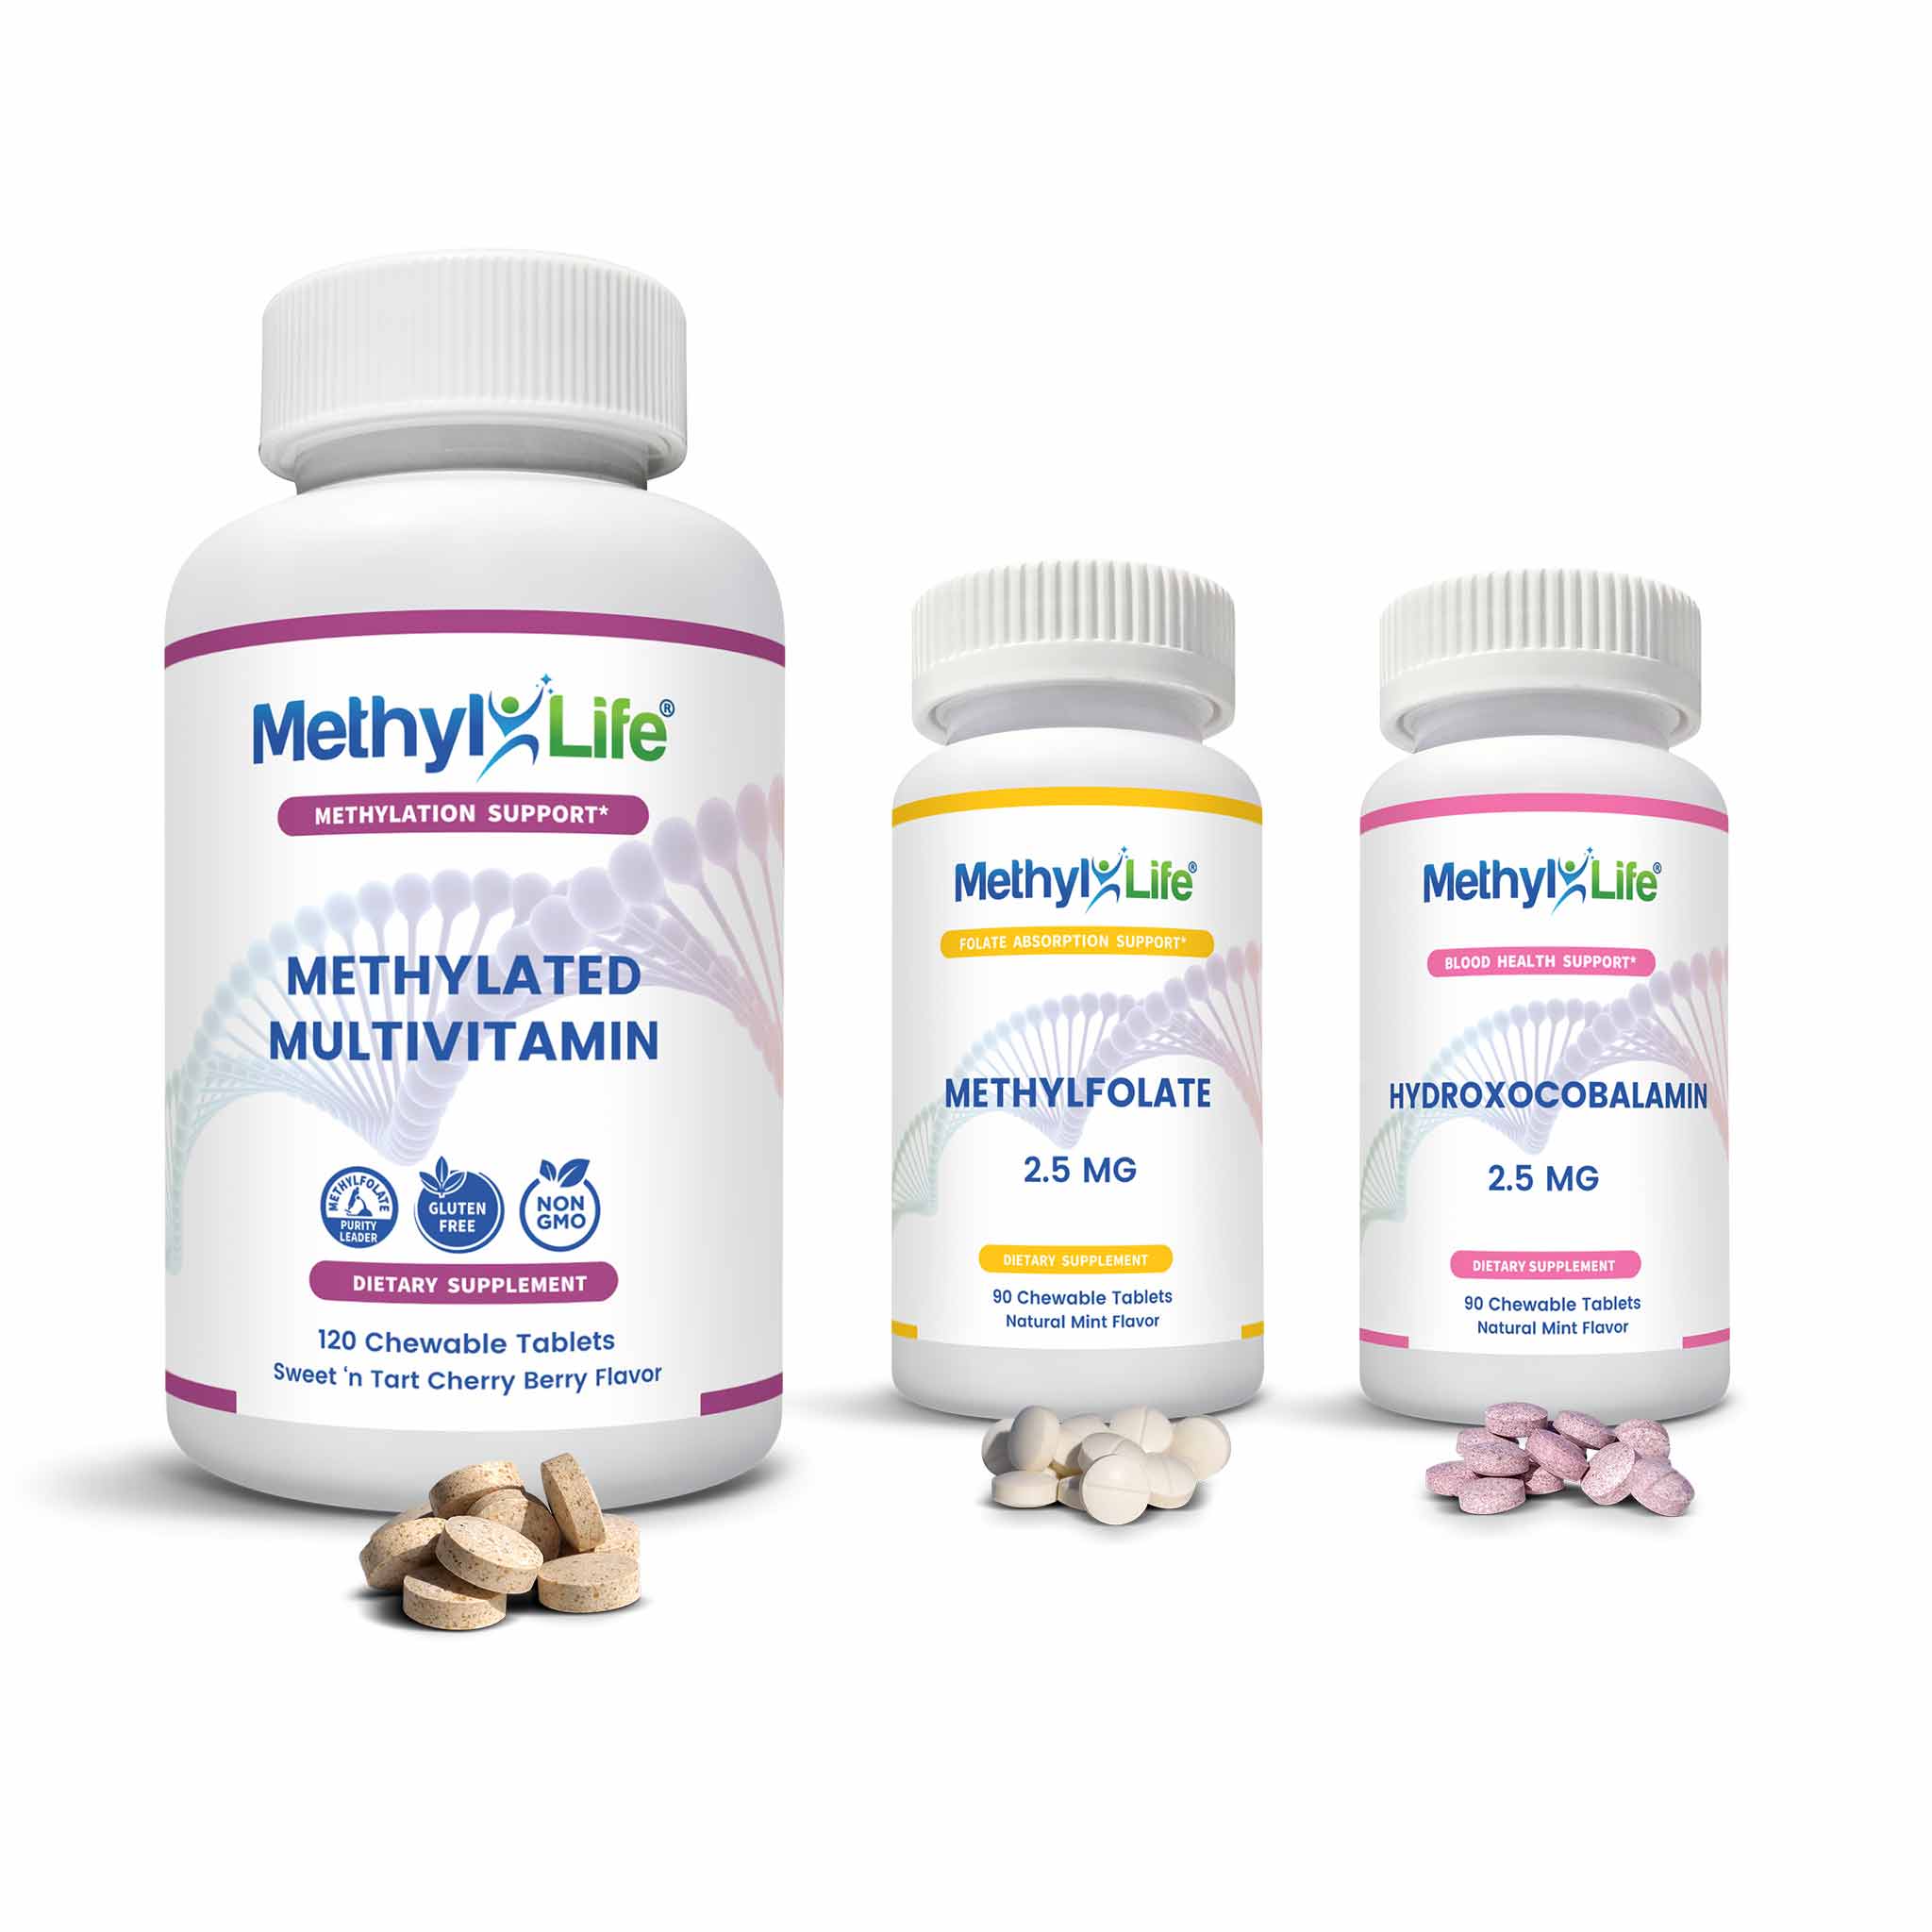 Pregnancy Bundle (3 product bottles + tablets) - Chewable Methylated Multi + L-Methylfolate 2.5 + Hydroxocobalamin - Methyl-Life